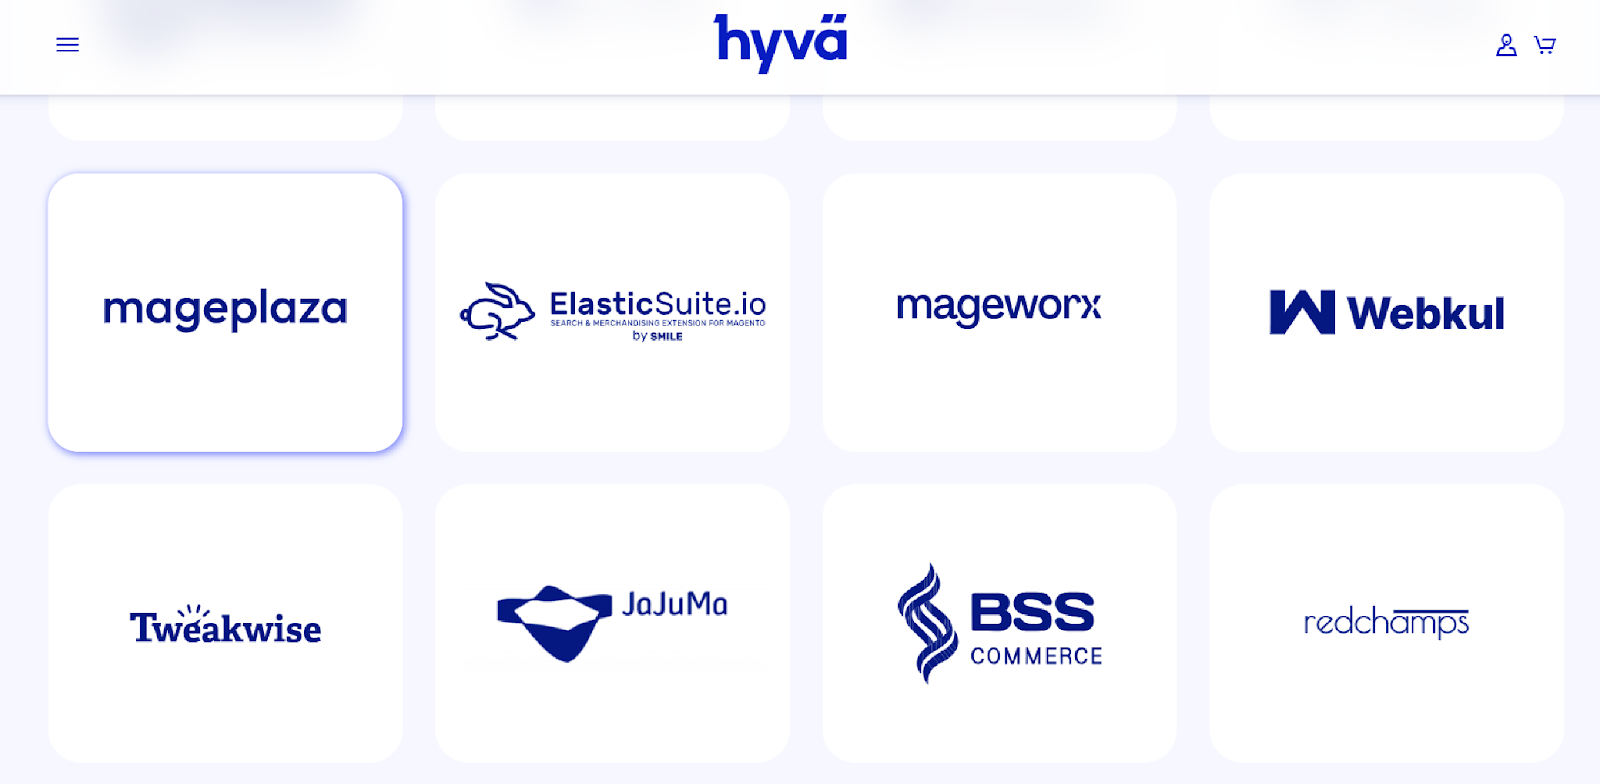 Partnership announcement between Mageplaza and Hyva